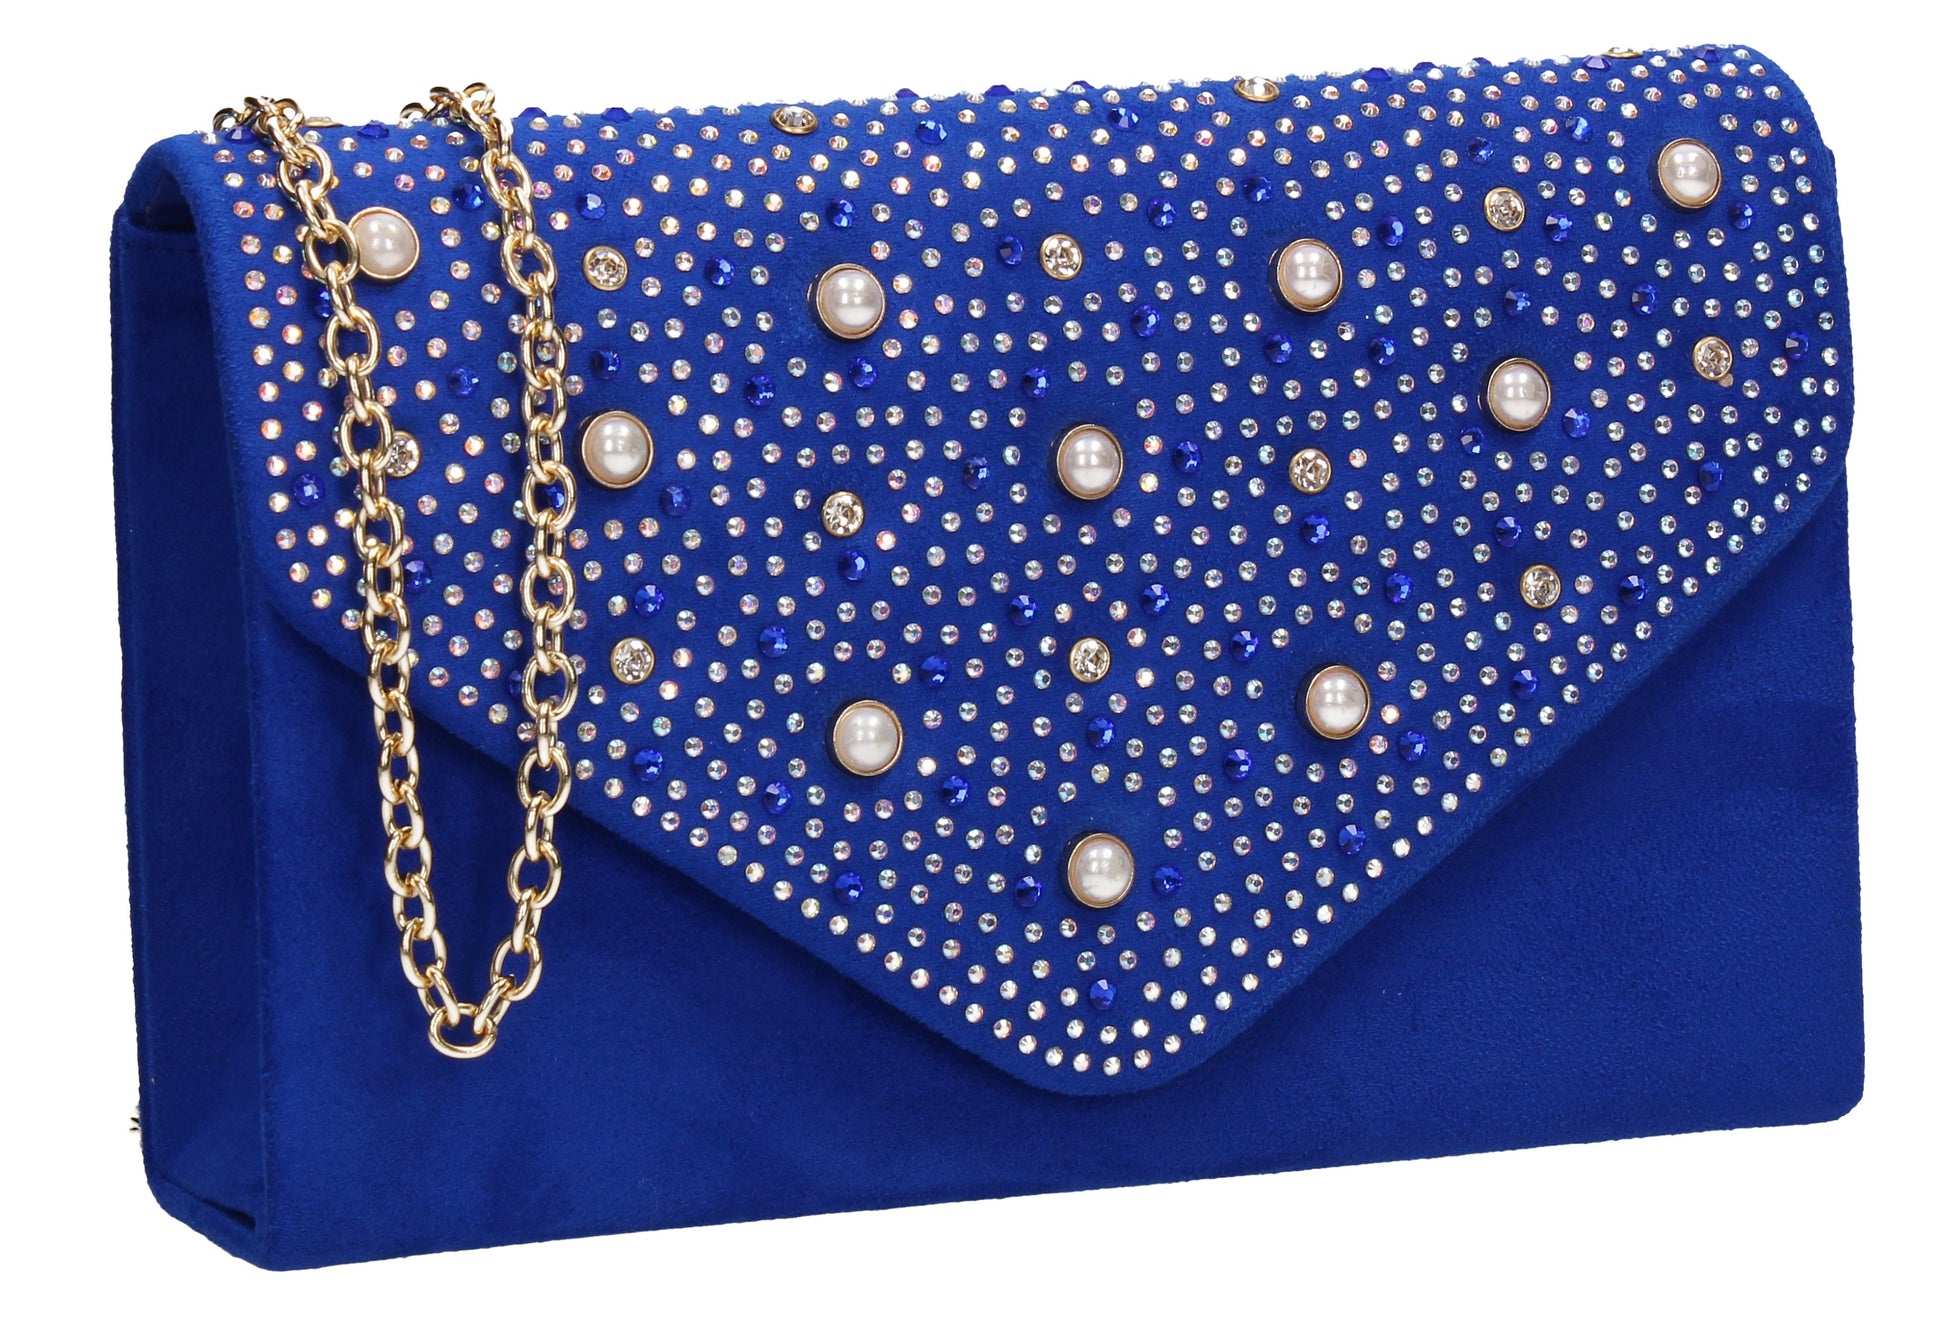 SWANKYSWANS Laurel Clutch Bag Royal Blue Cute Cheap Clutch Bag For Weddings School and Work